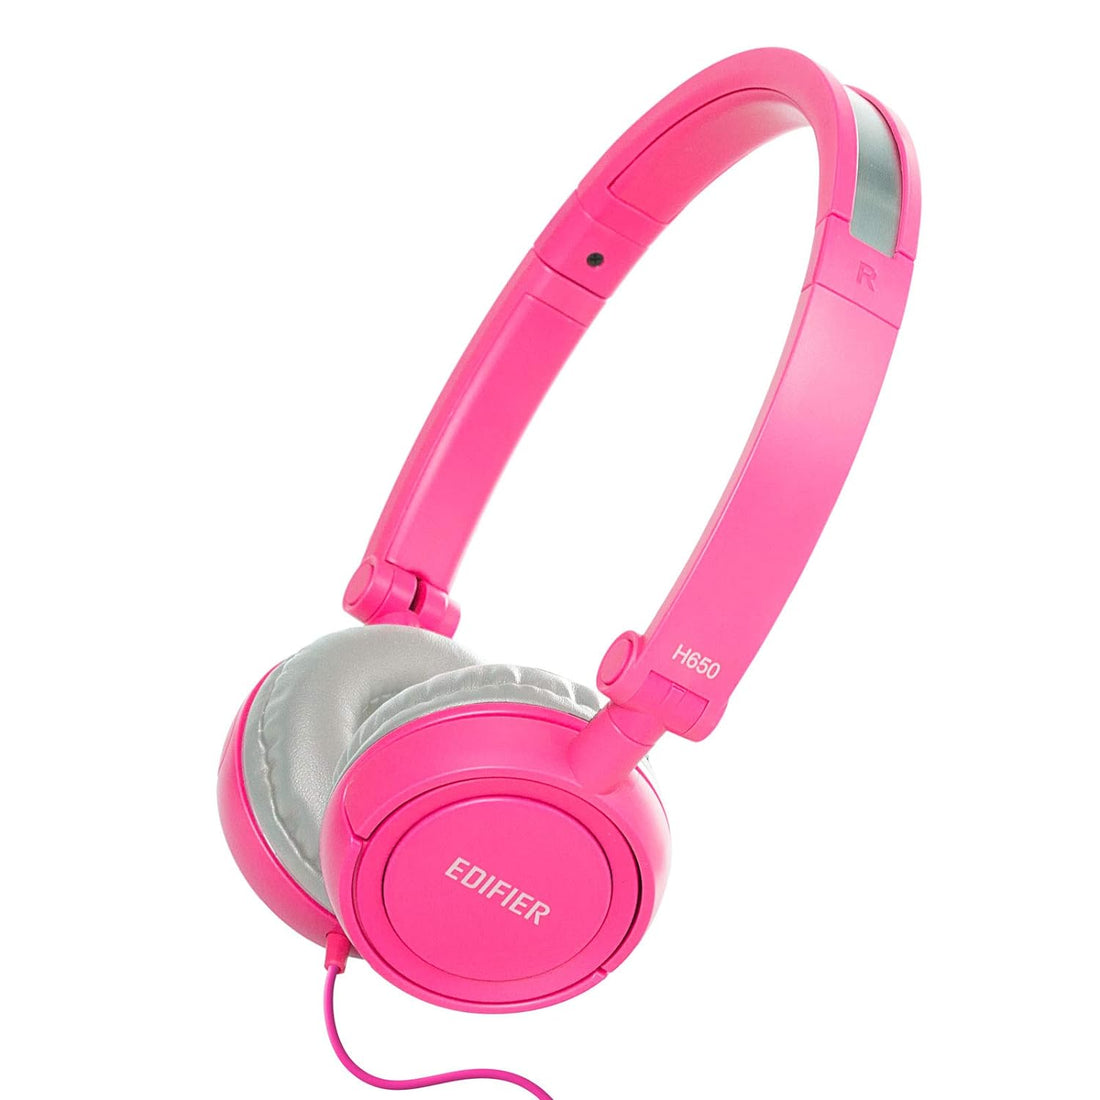 Edifier H650 On-Ear Headphones (Pink)